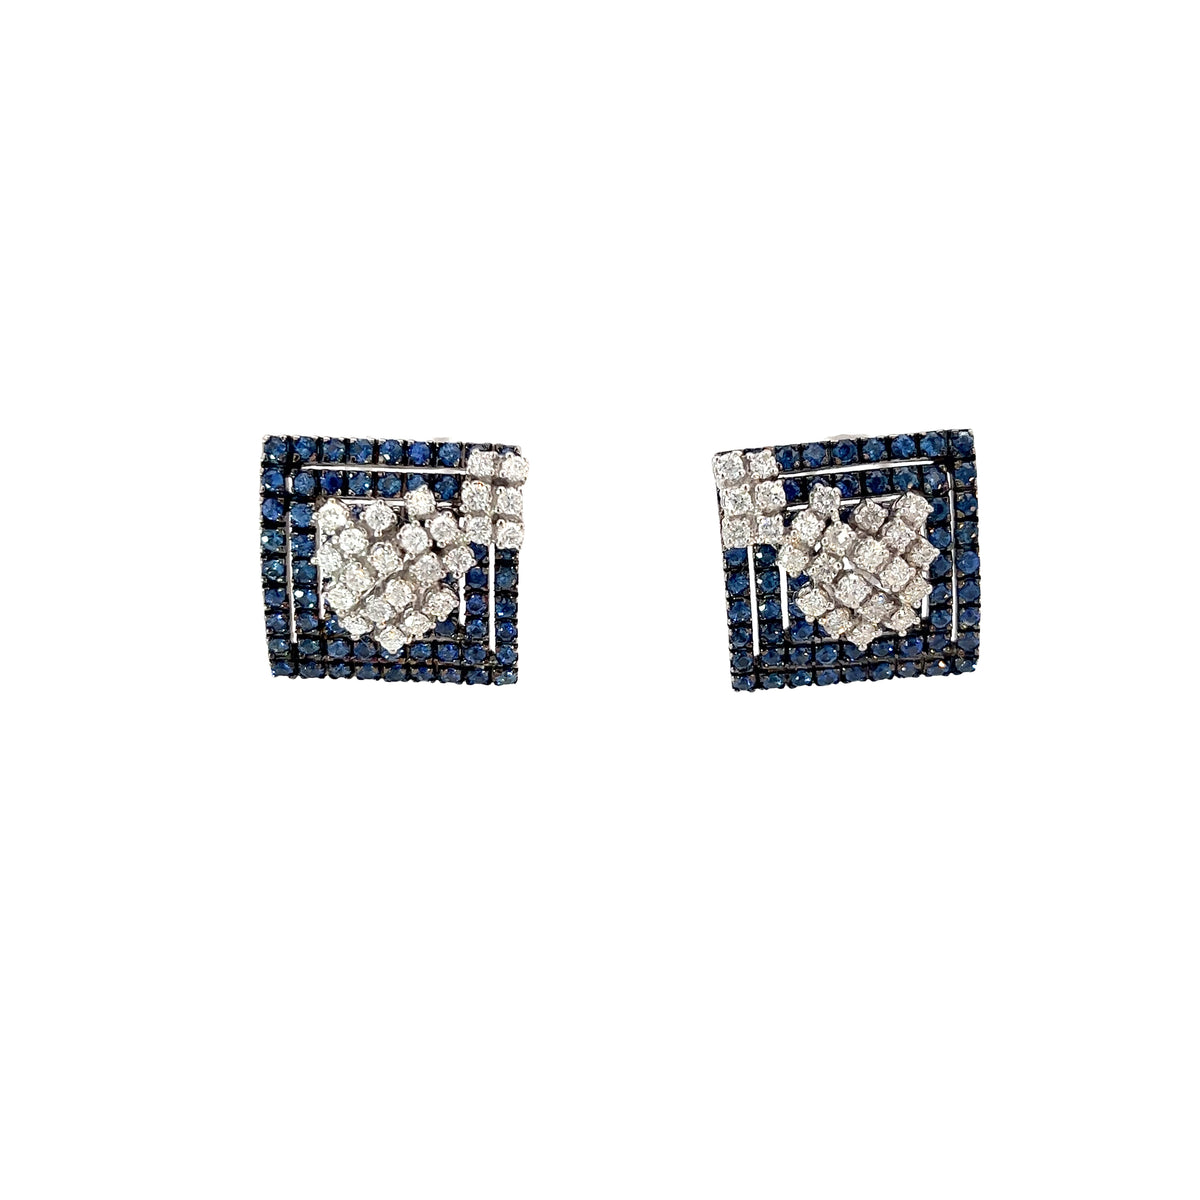 Ladies Vintage 18k White gold Diamond and Sapphire earrings